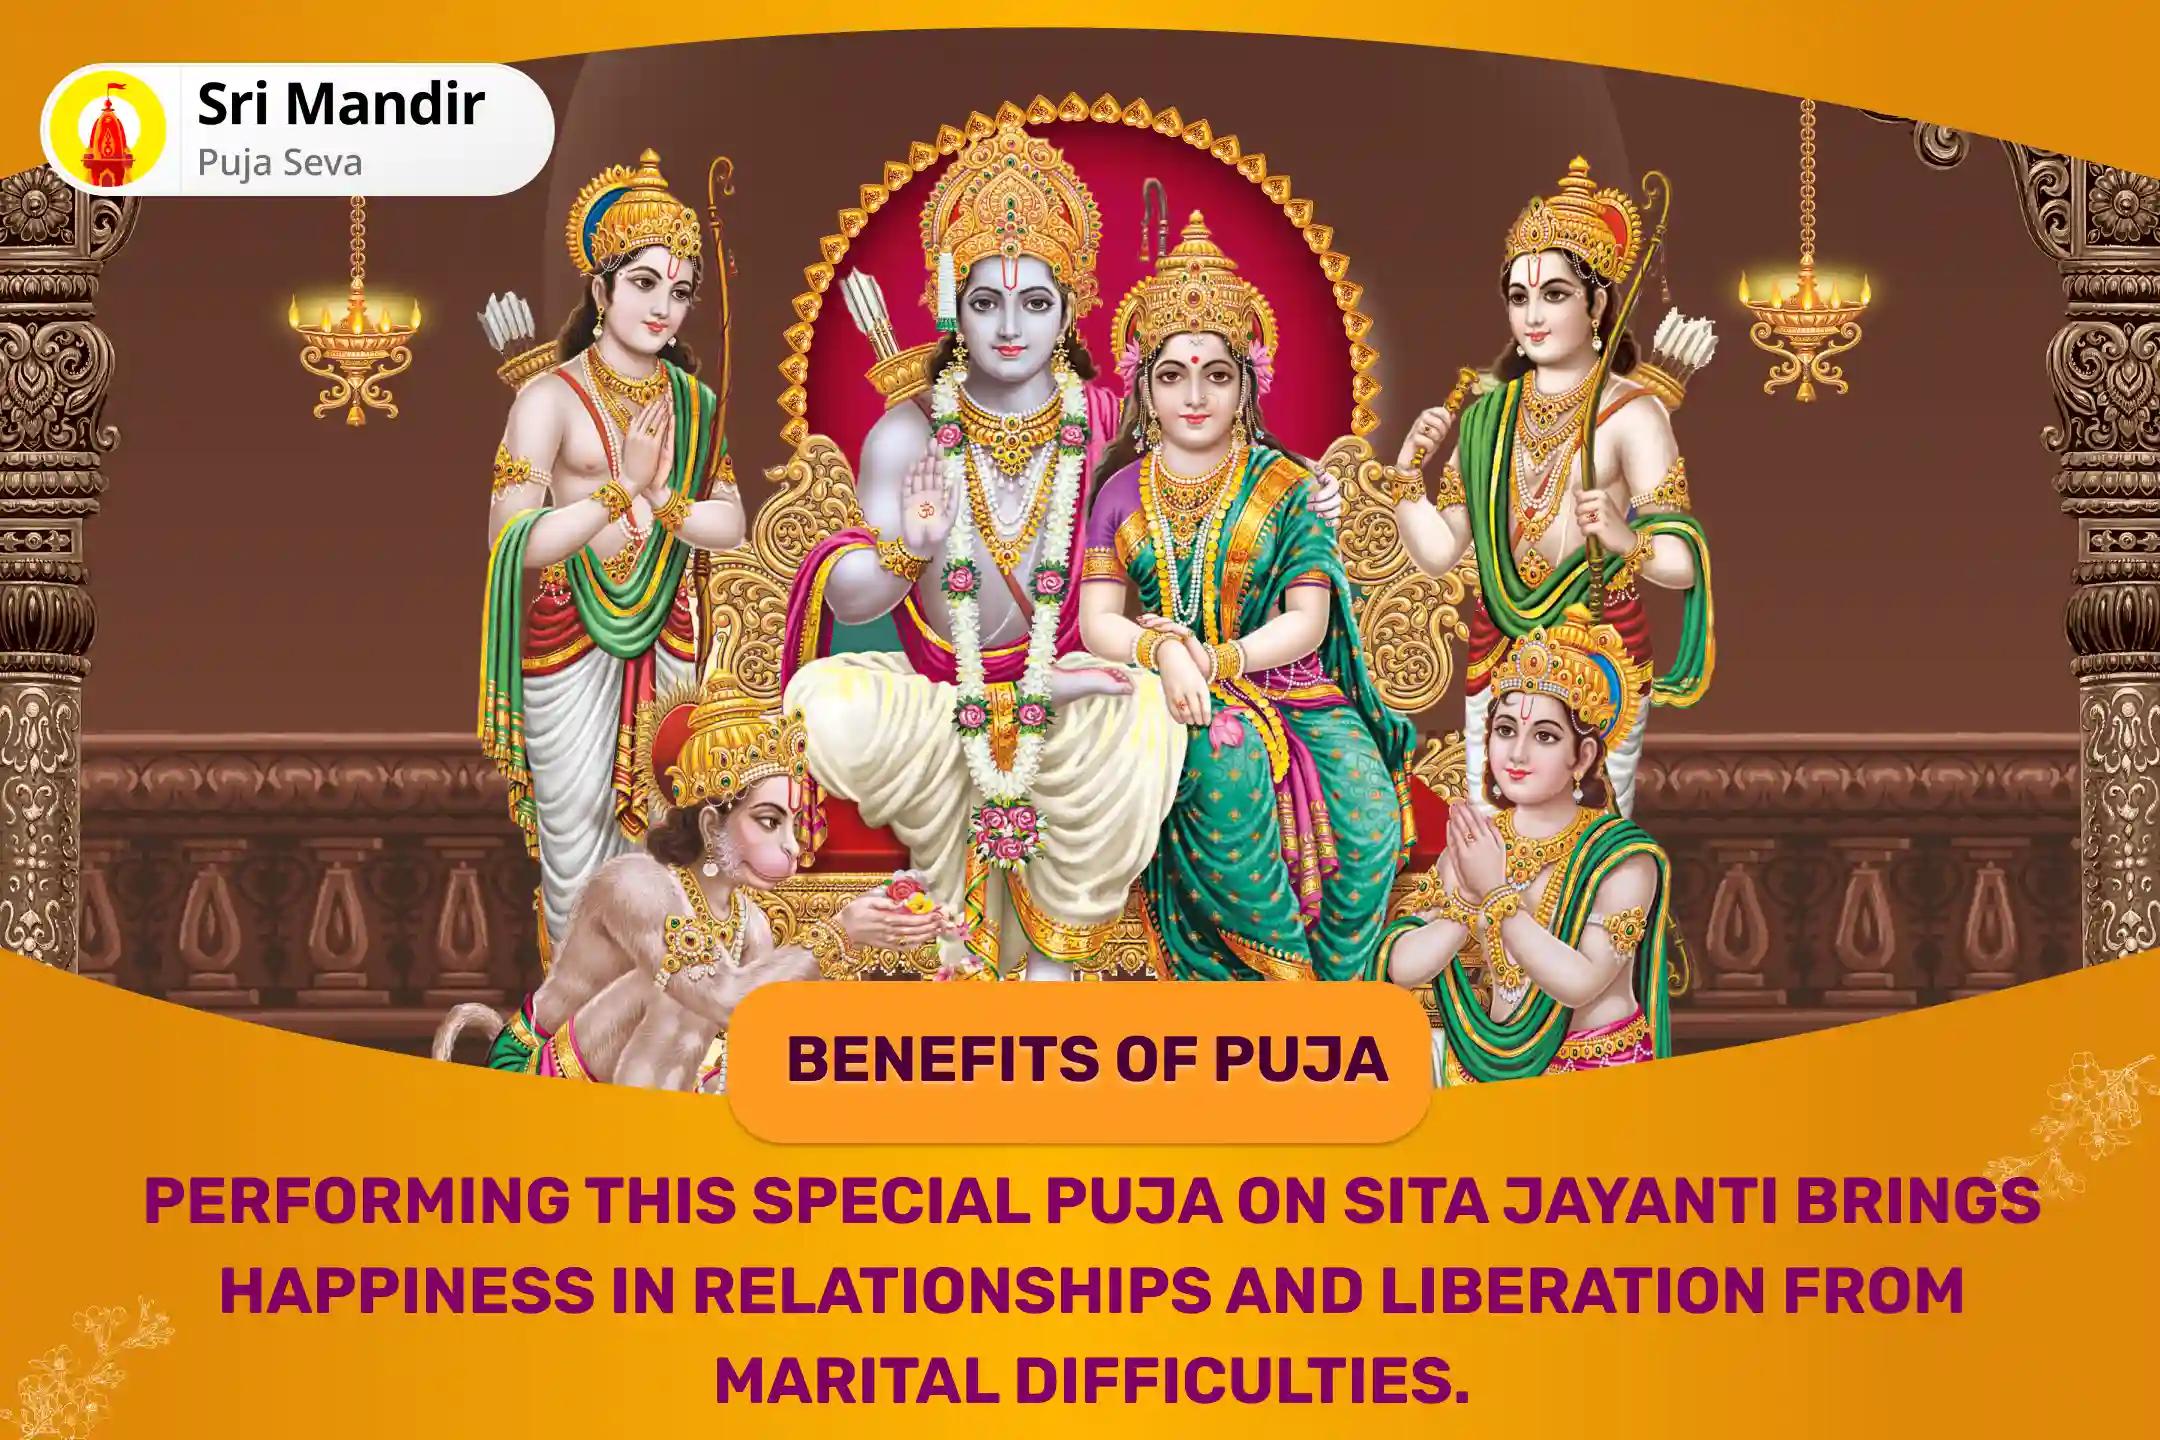 Sita Jayanti Ayodhya Special Sita Ashtottara Shatanamavali Path for Bliss in Relationship and to Resolve Marital Conflicts